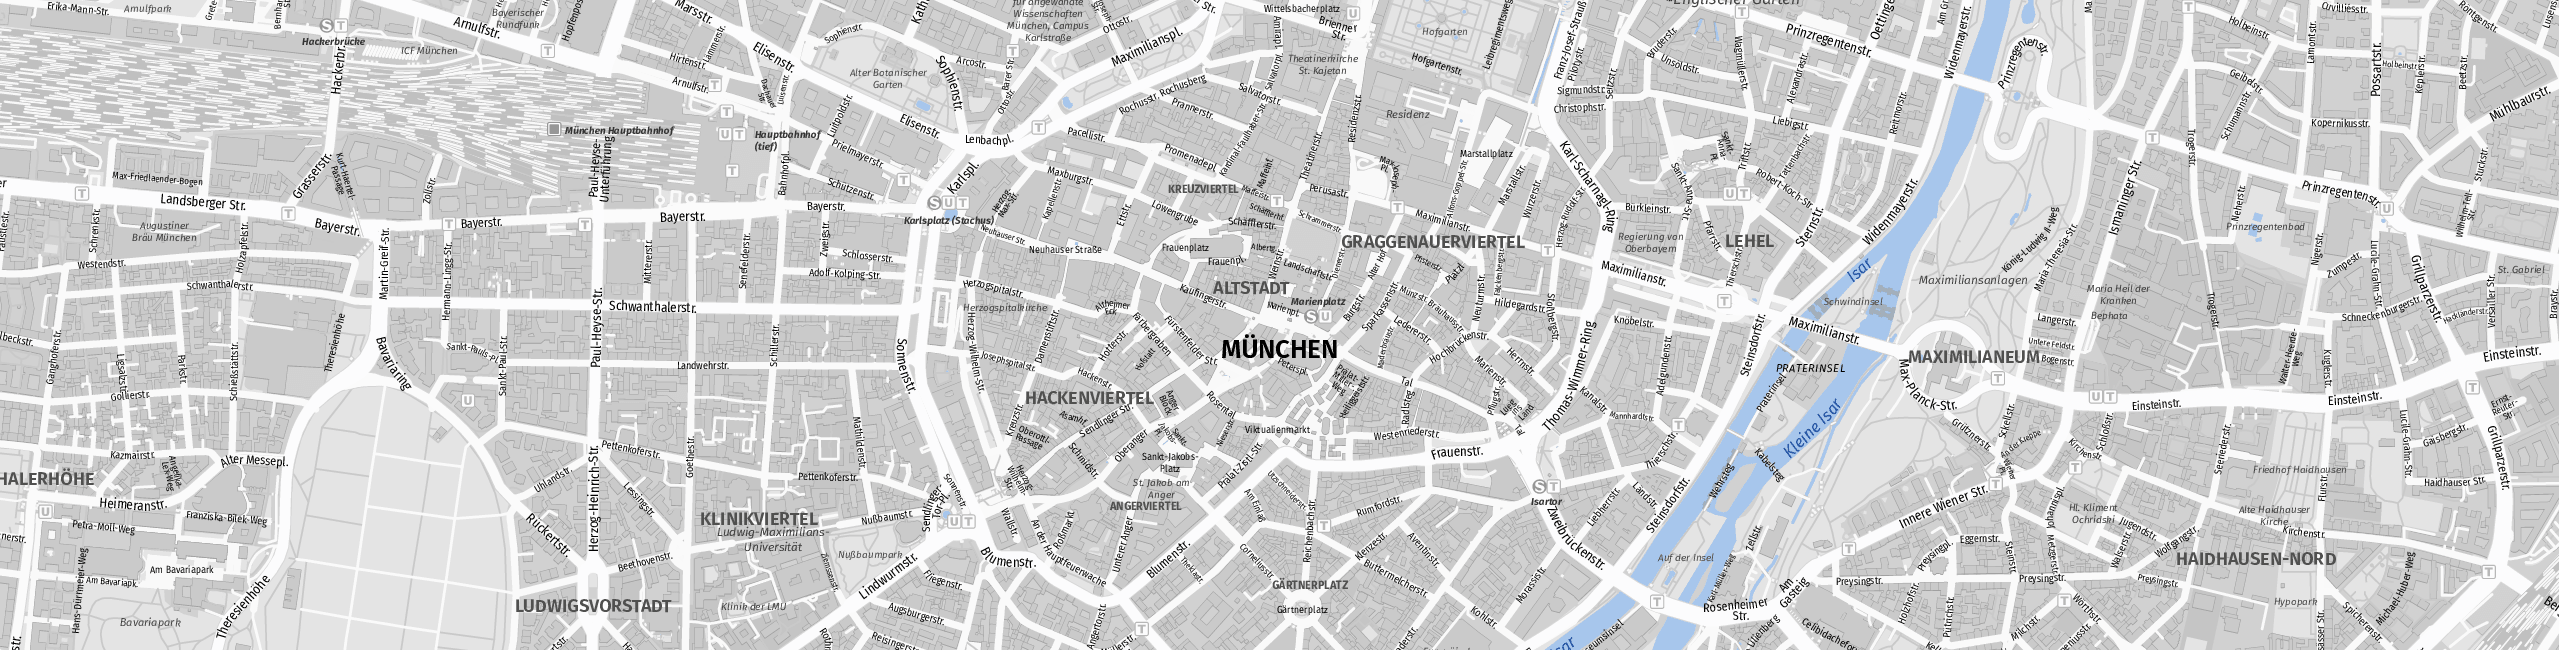 Stadtplan München zum Downloaden.